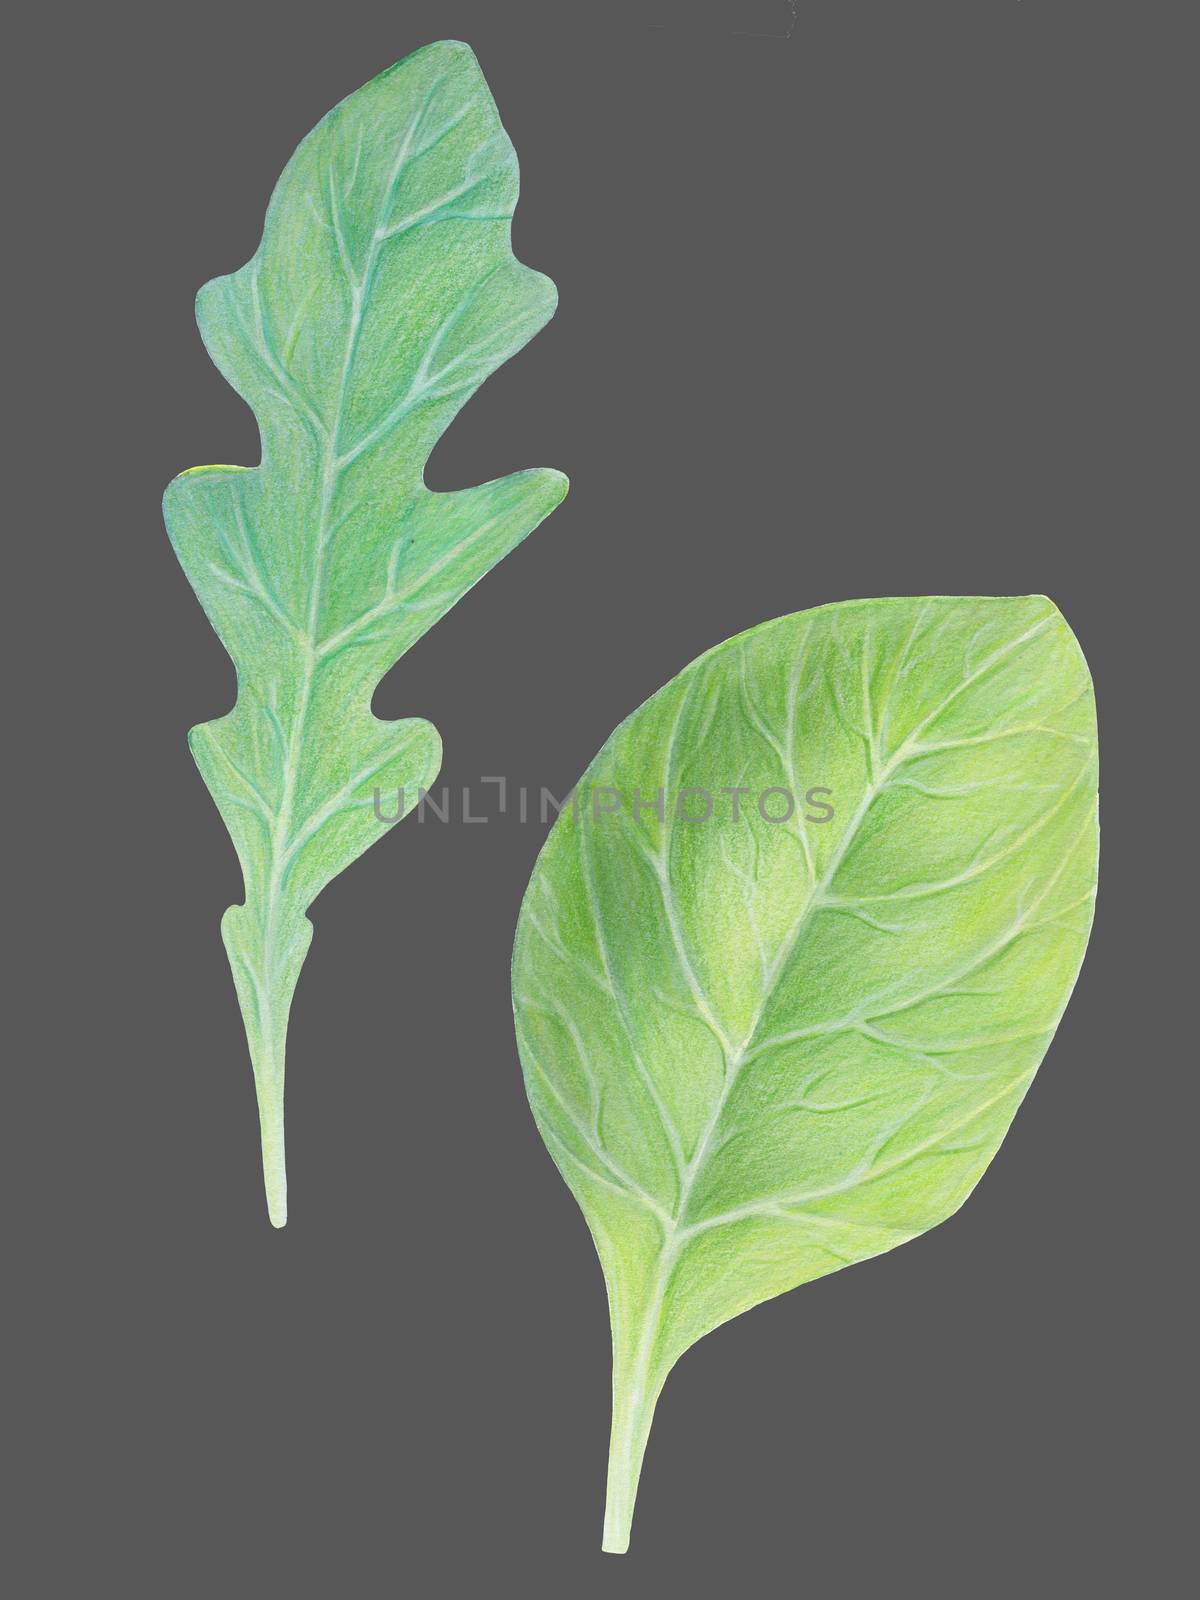 Arugula rucola (rocket salad) and spinach. Fresh green leaves isolated on dark background. Watercolour hand drawn illustration. Fresh herbs. Realistic botanical art. Vegetarian Ingredient. Organic food